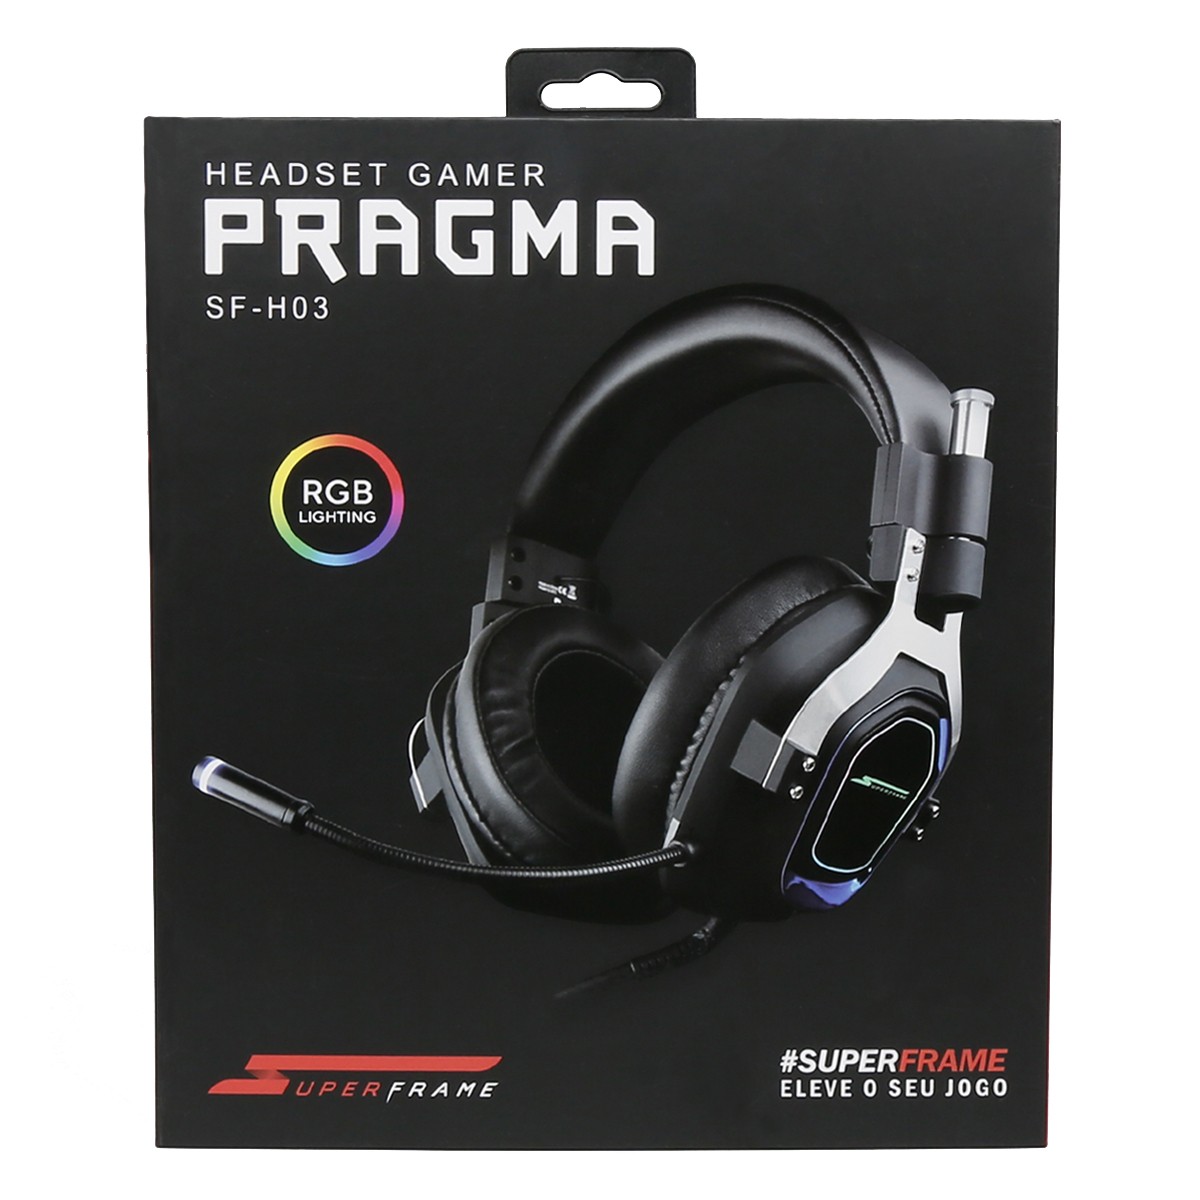 Headset Gamer SuperFrame PRAGMA, Drivers de 50mm, 7.1 Surround, RGB, USB, Black